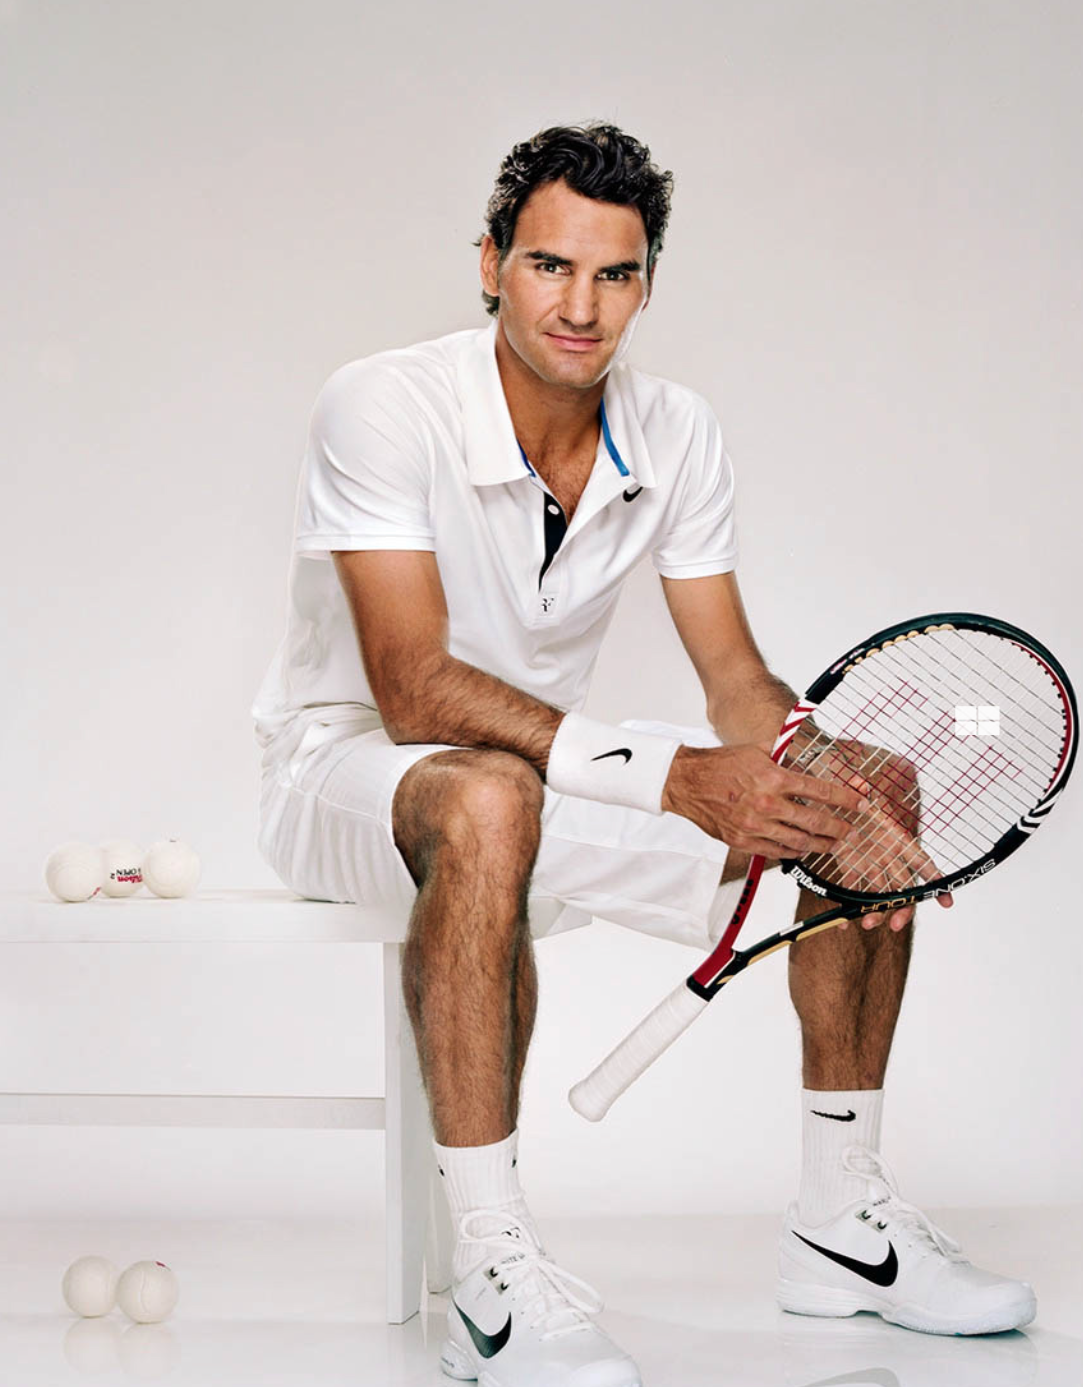 Теннис мужчины. Теннисист Роджер Федерер. Роджер Федерер фотосессия. Фигура теннисиста Роджер Федерер. Роджер Федерер с бородой.